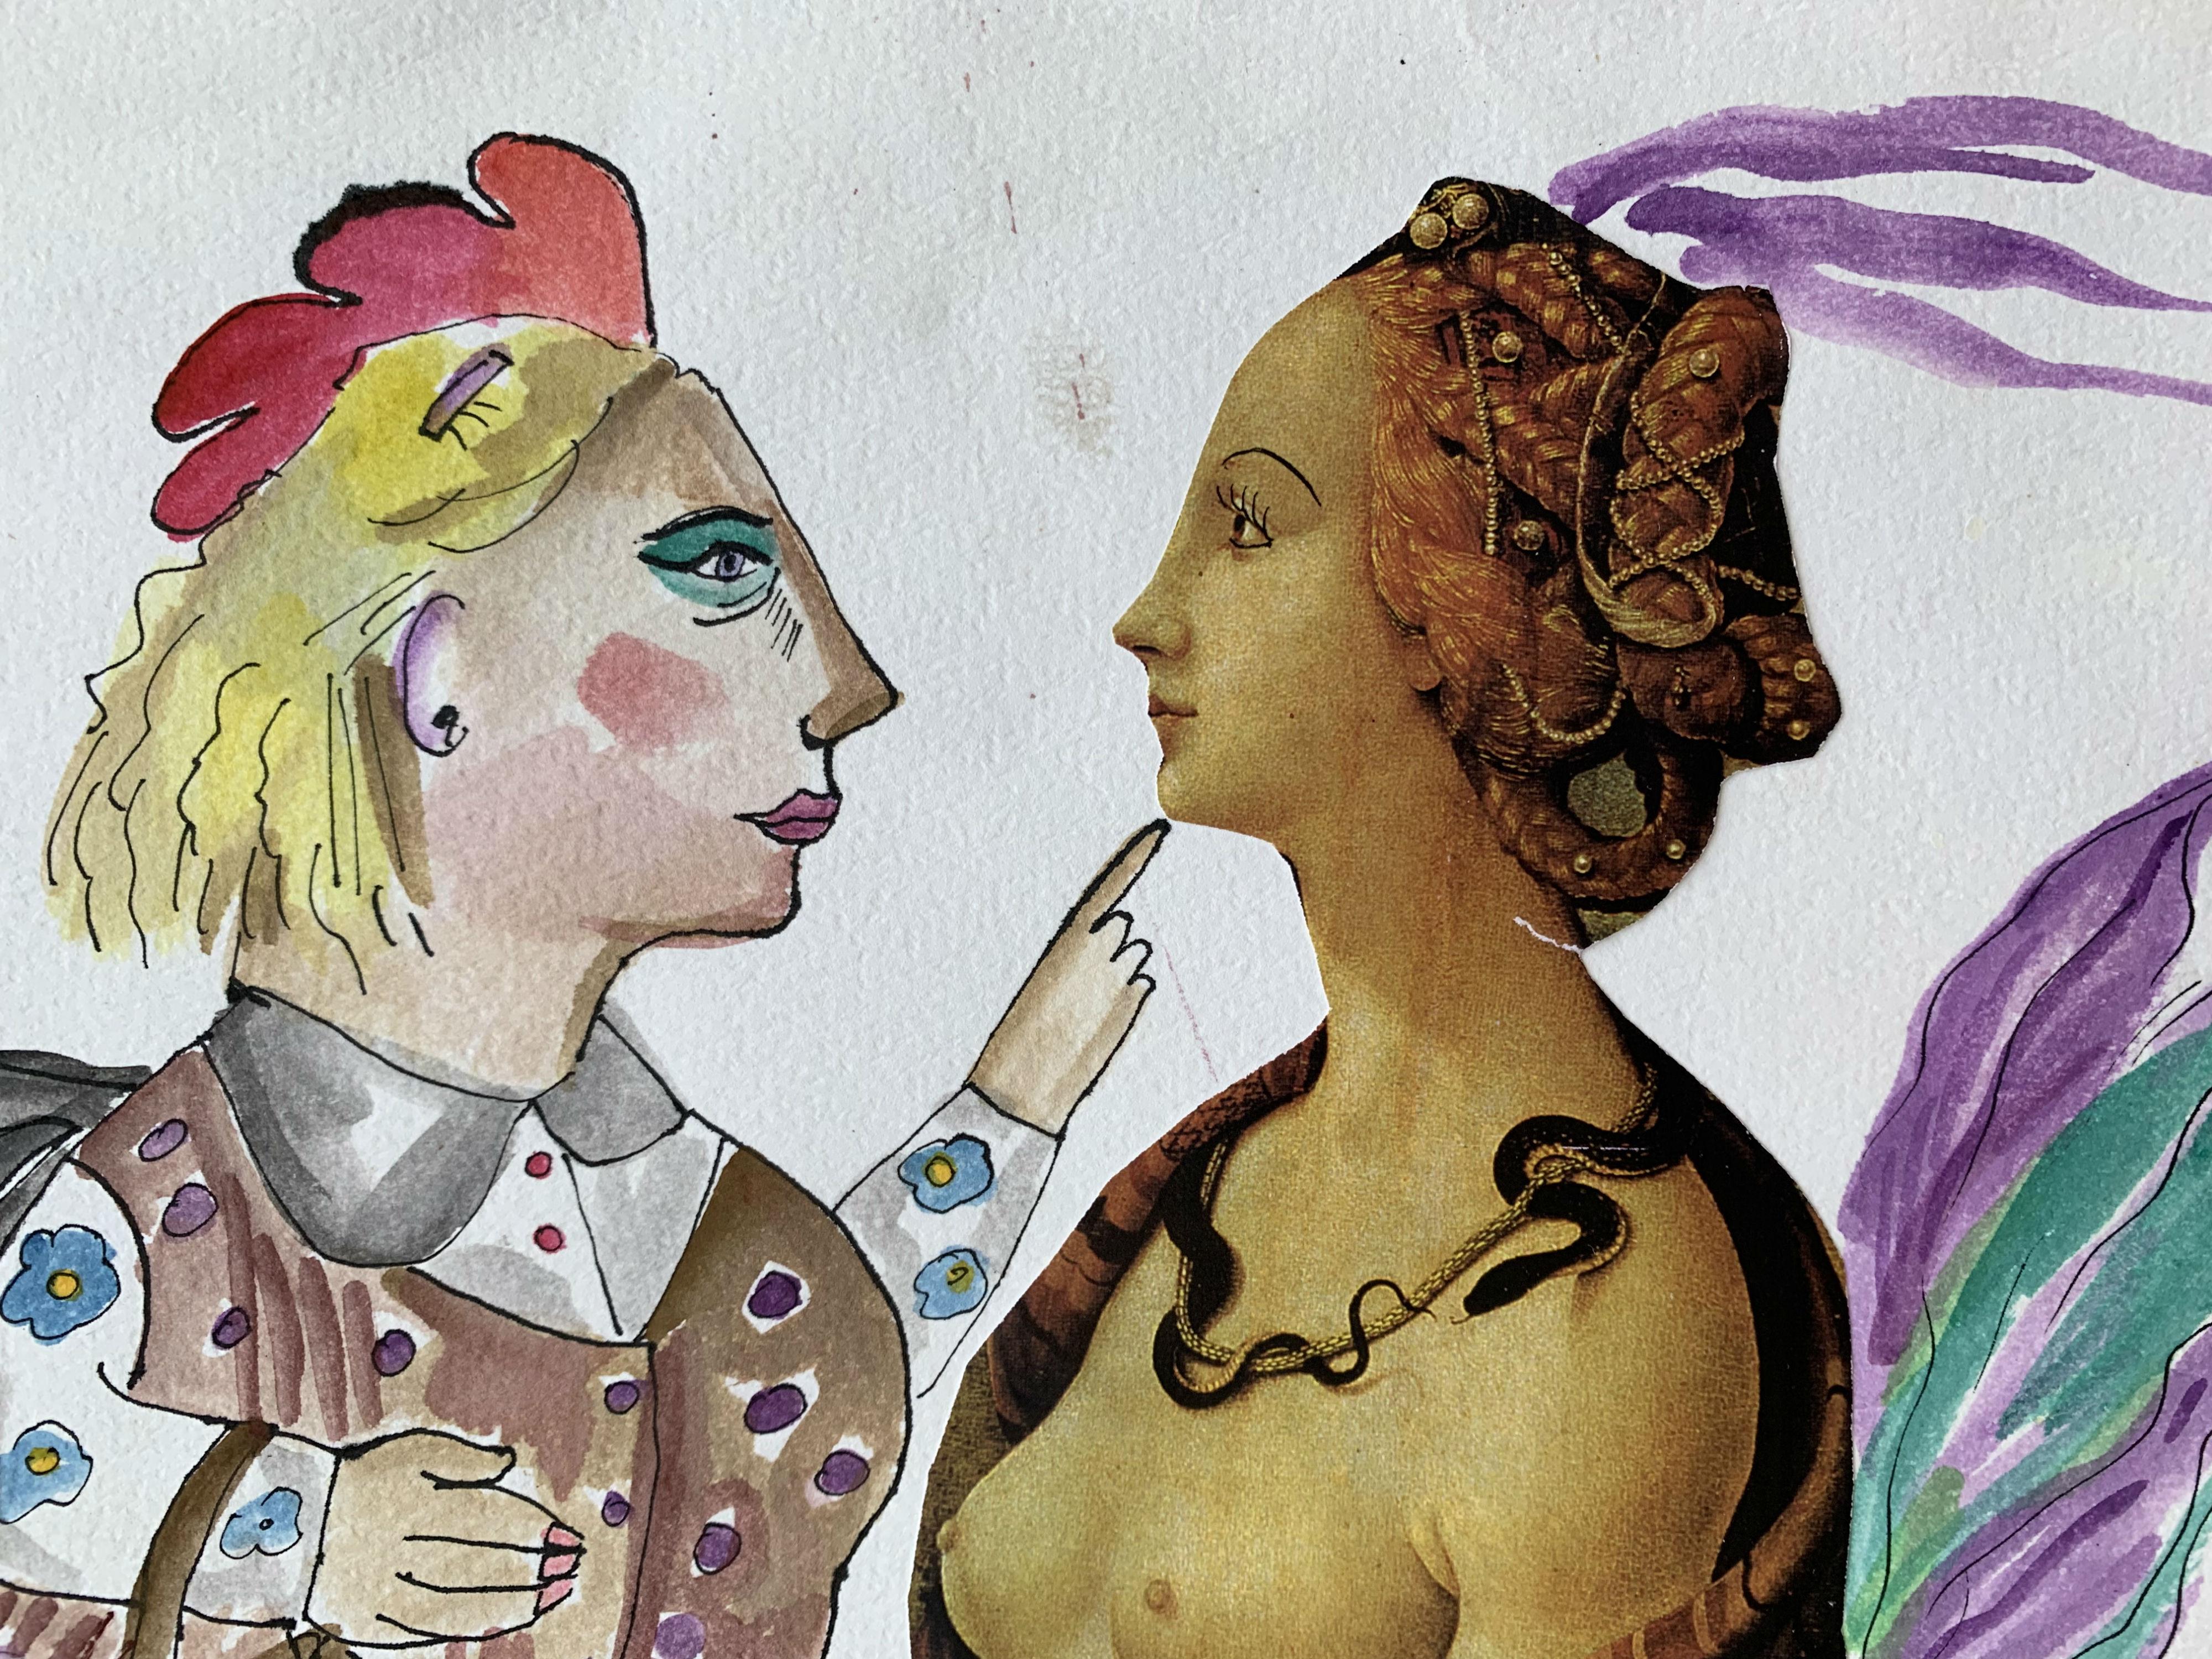 Renaissance familiarity - Watercolour collage, Figurative, Colourful, Satirical - Other Art Style Art by Hanna Bakuła